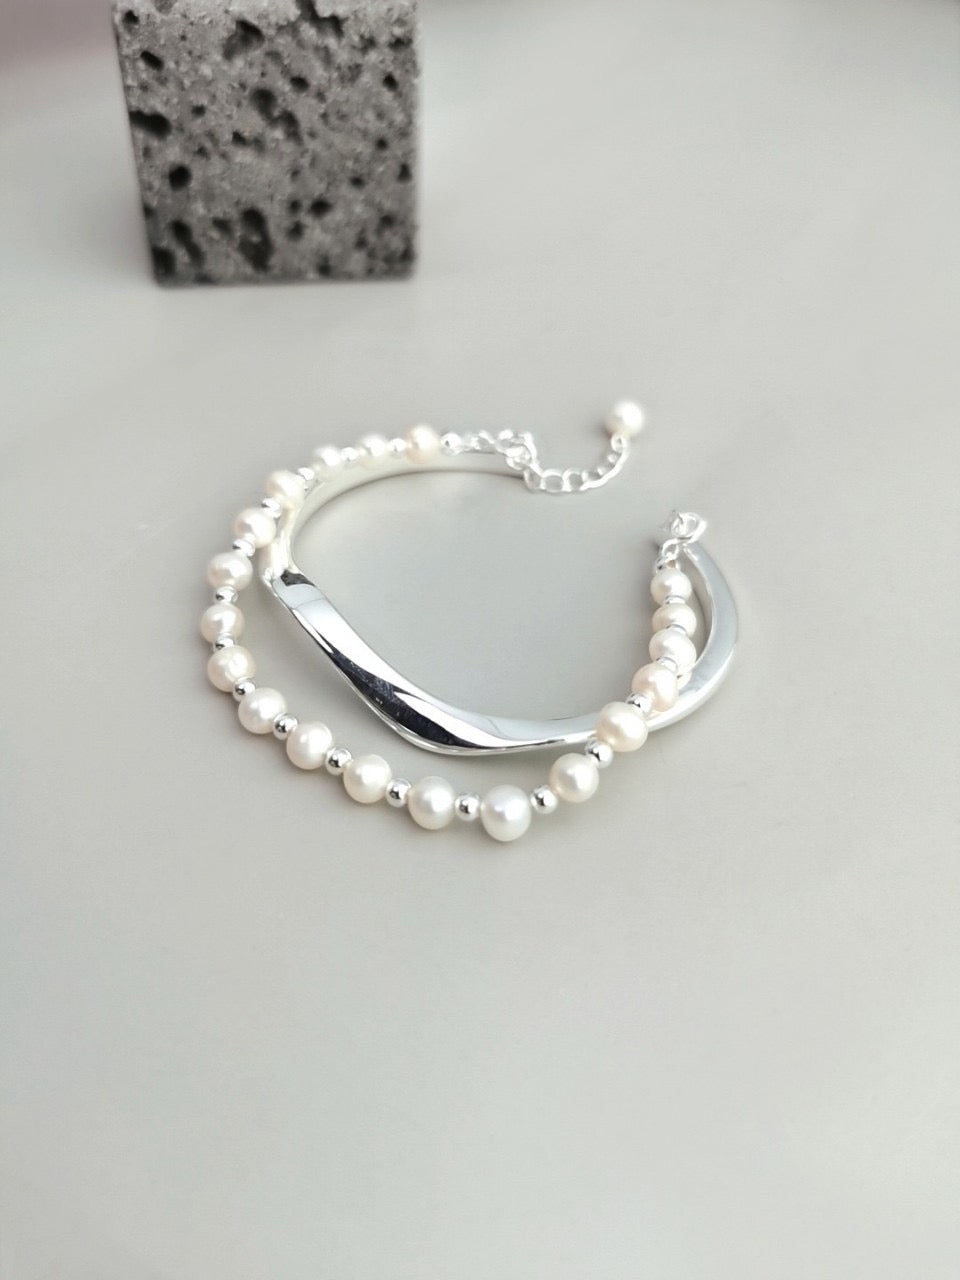 Mobius ring pearl bracelet